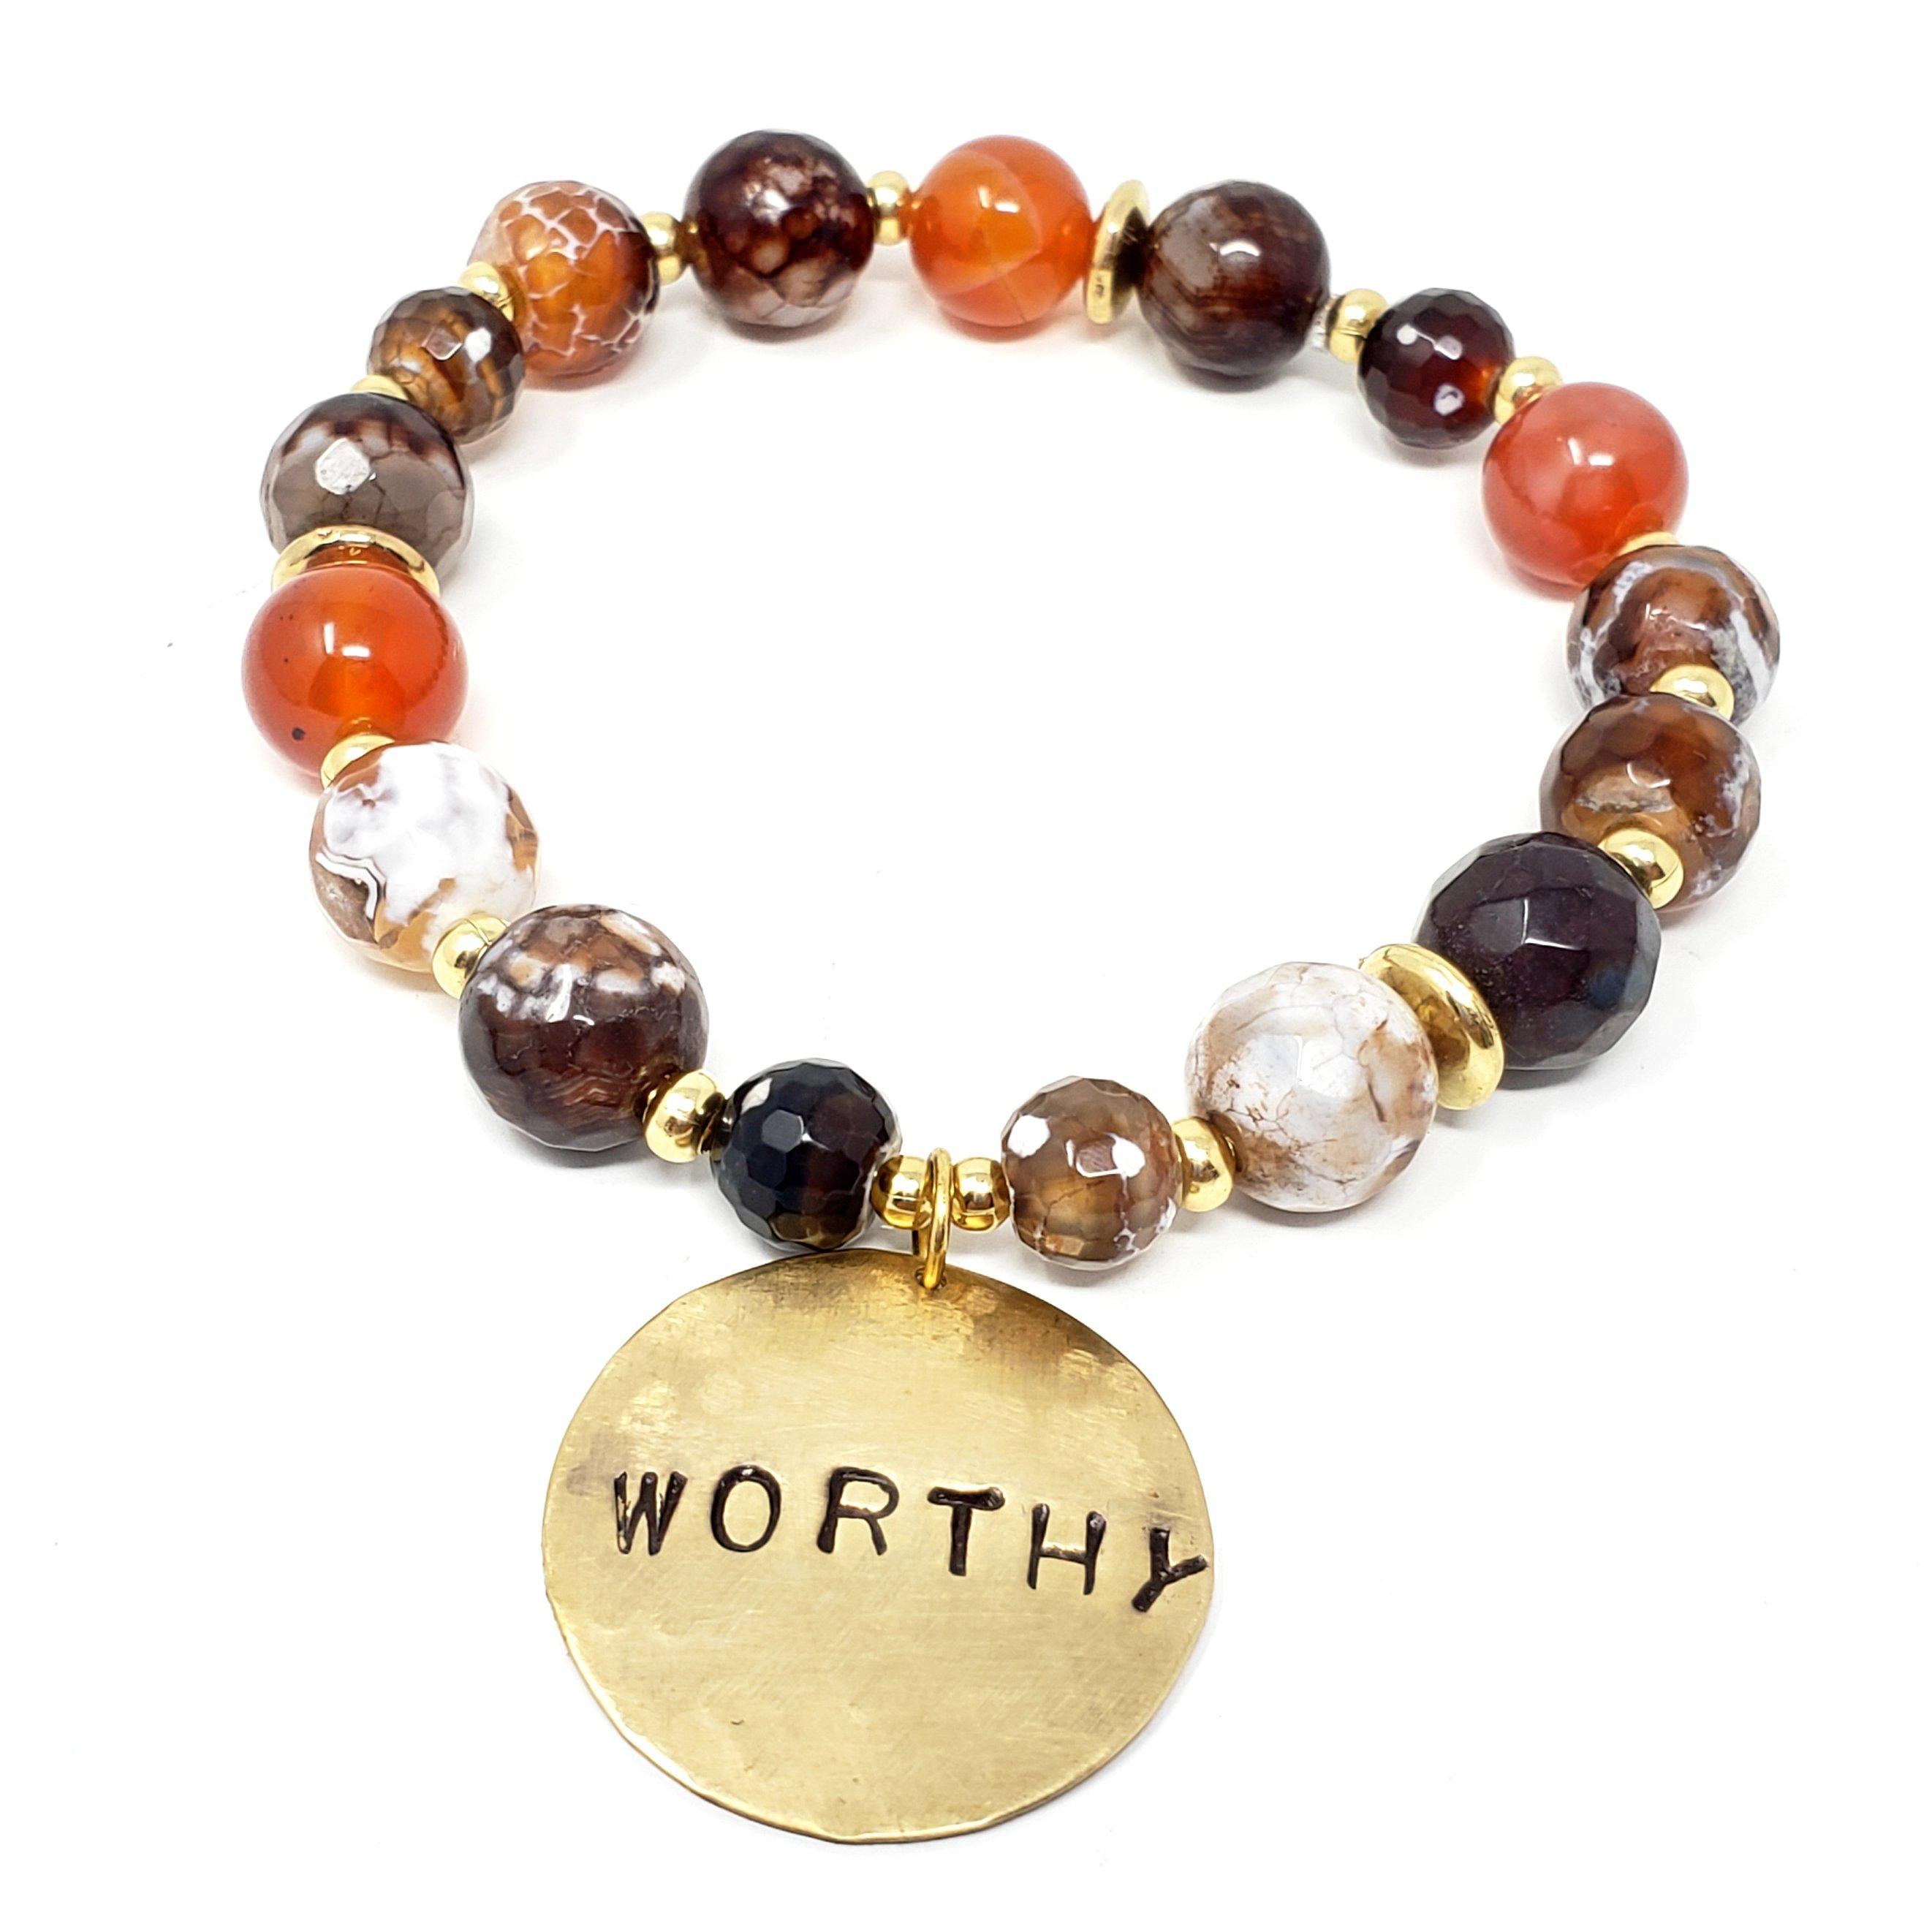 "I Am Worthy" Affirmation Bracelets